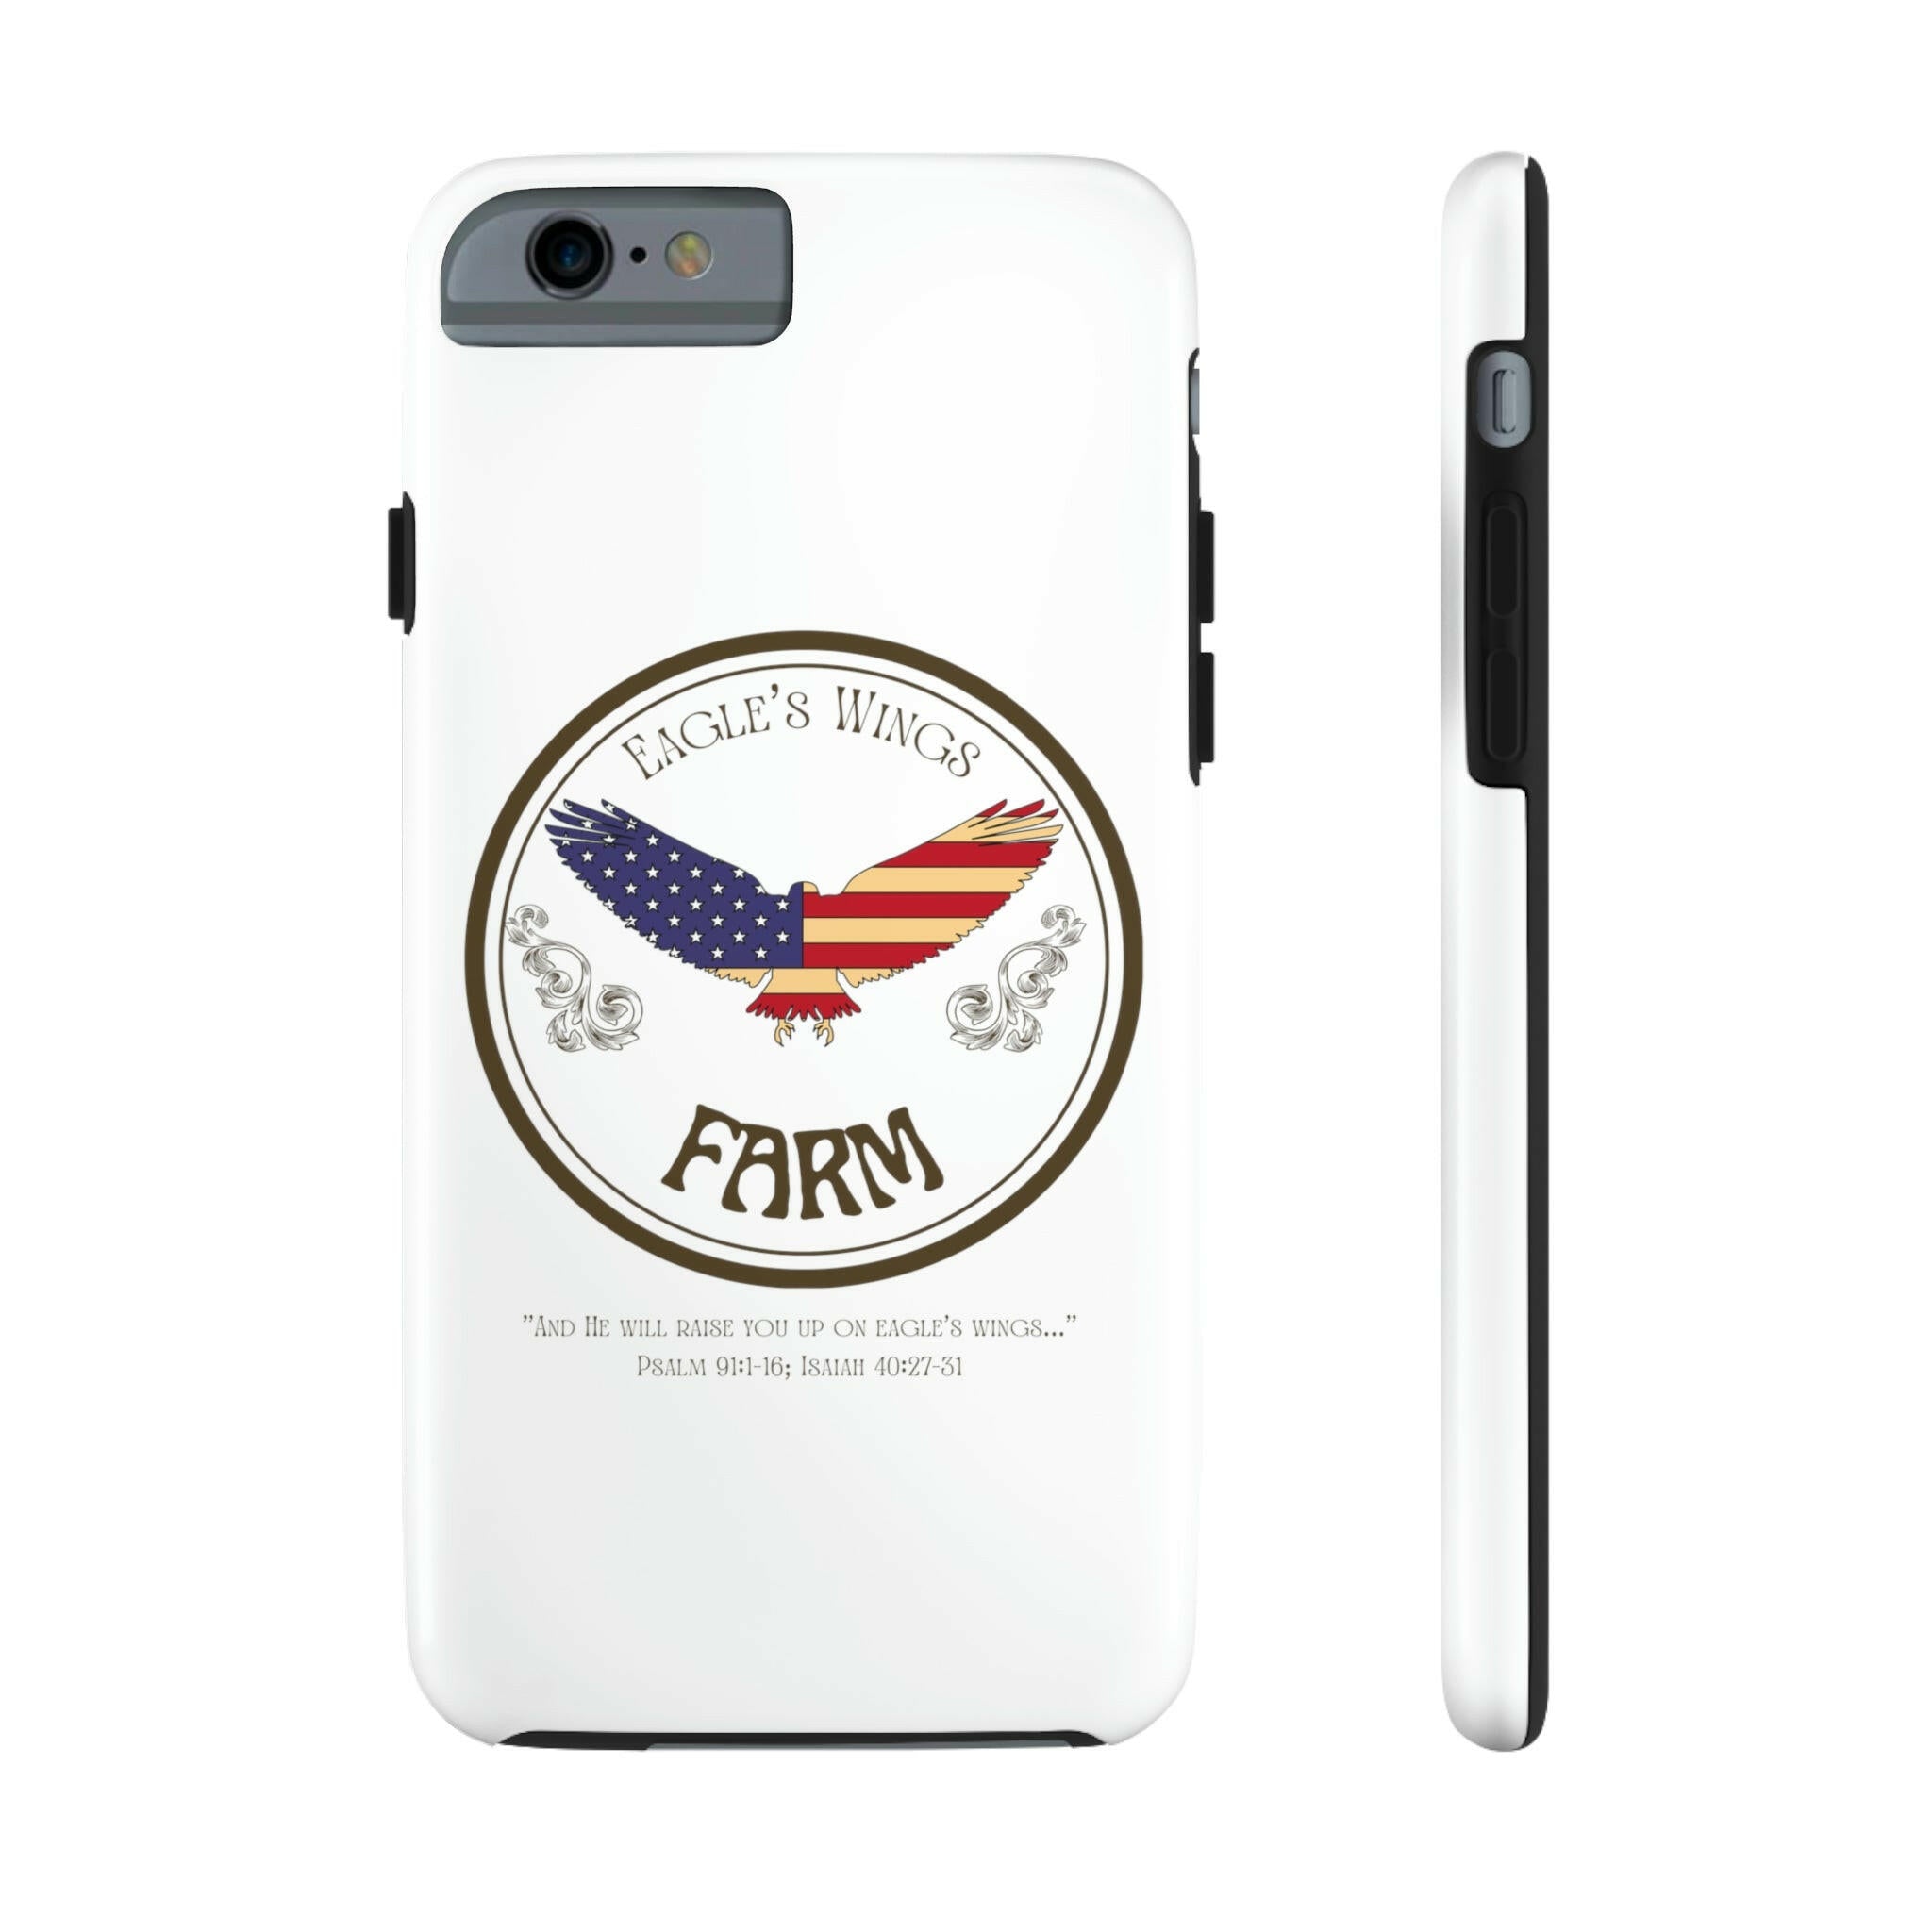 Eagle's Wings Farm - Tough iPhone Cases